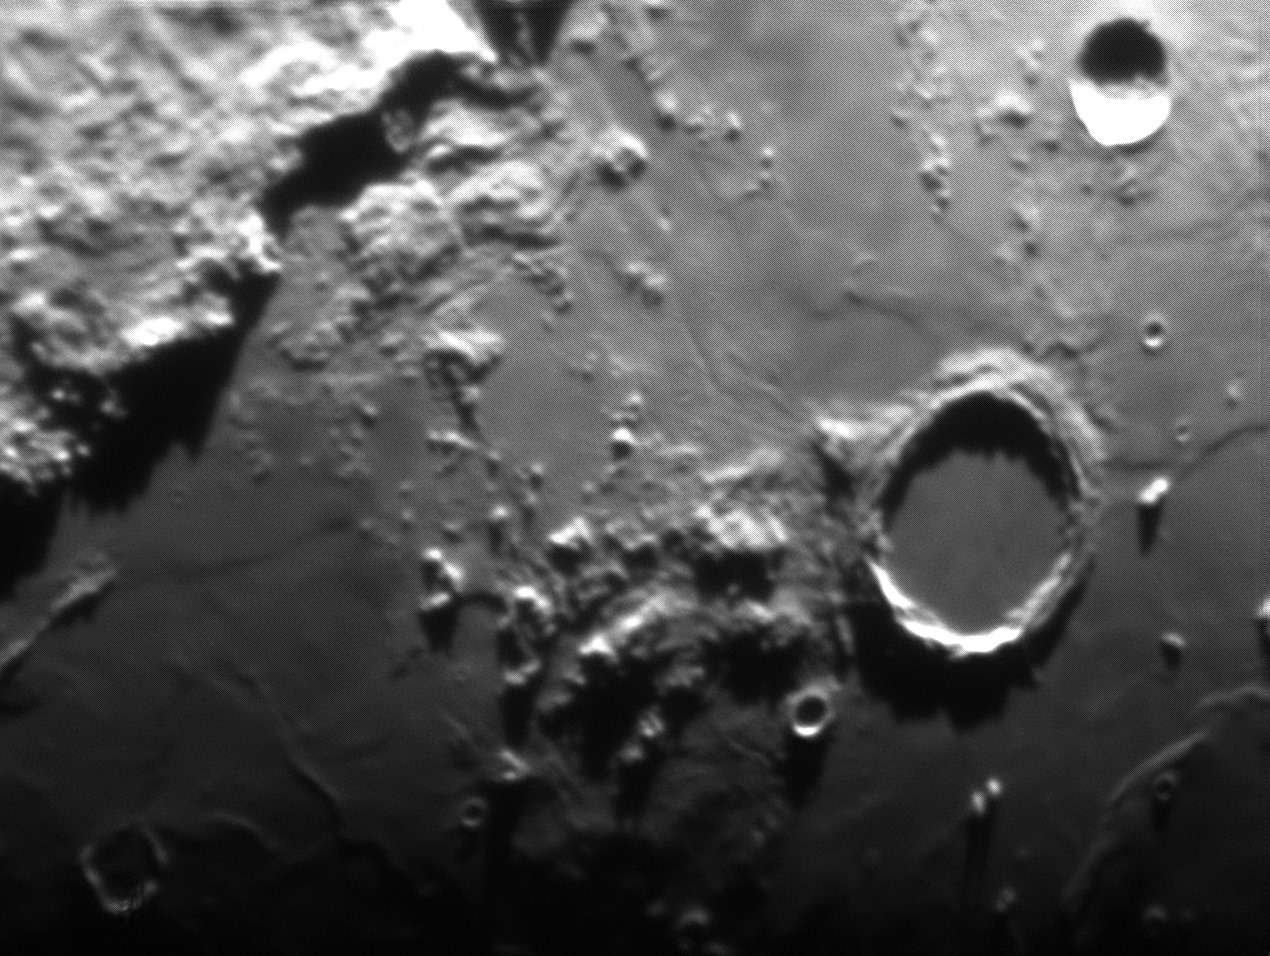 Archimedes Crater shot 1, 6 10 19